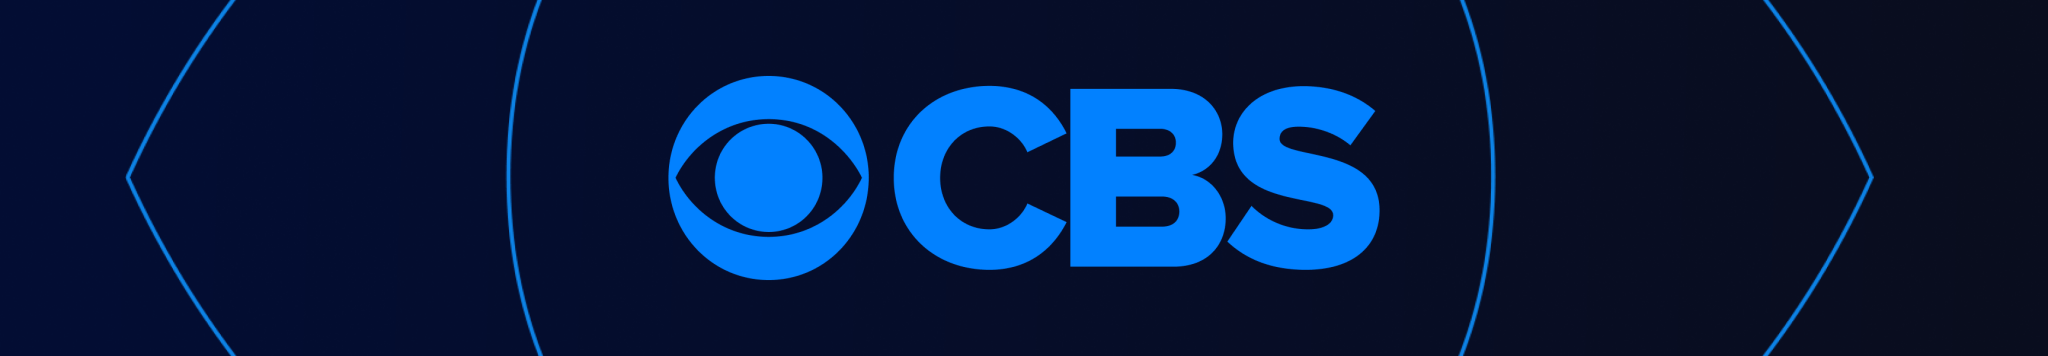 CBS Entertainment